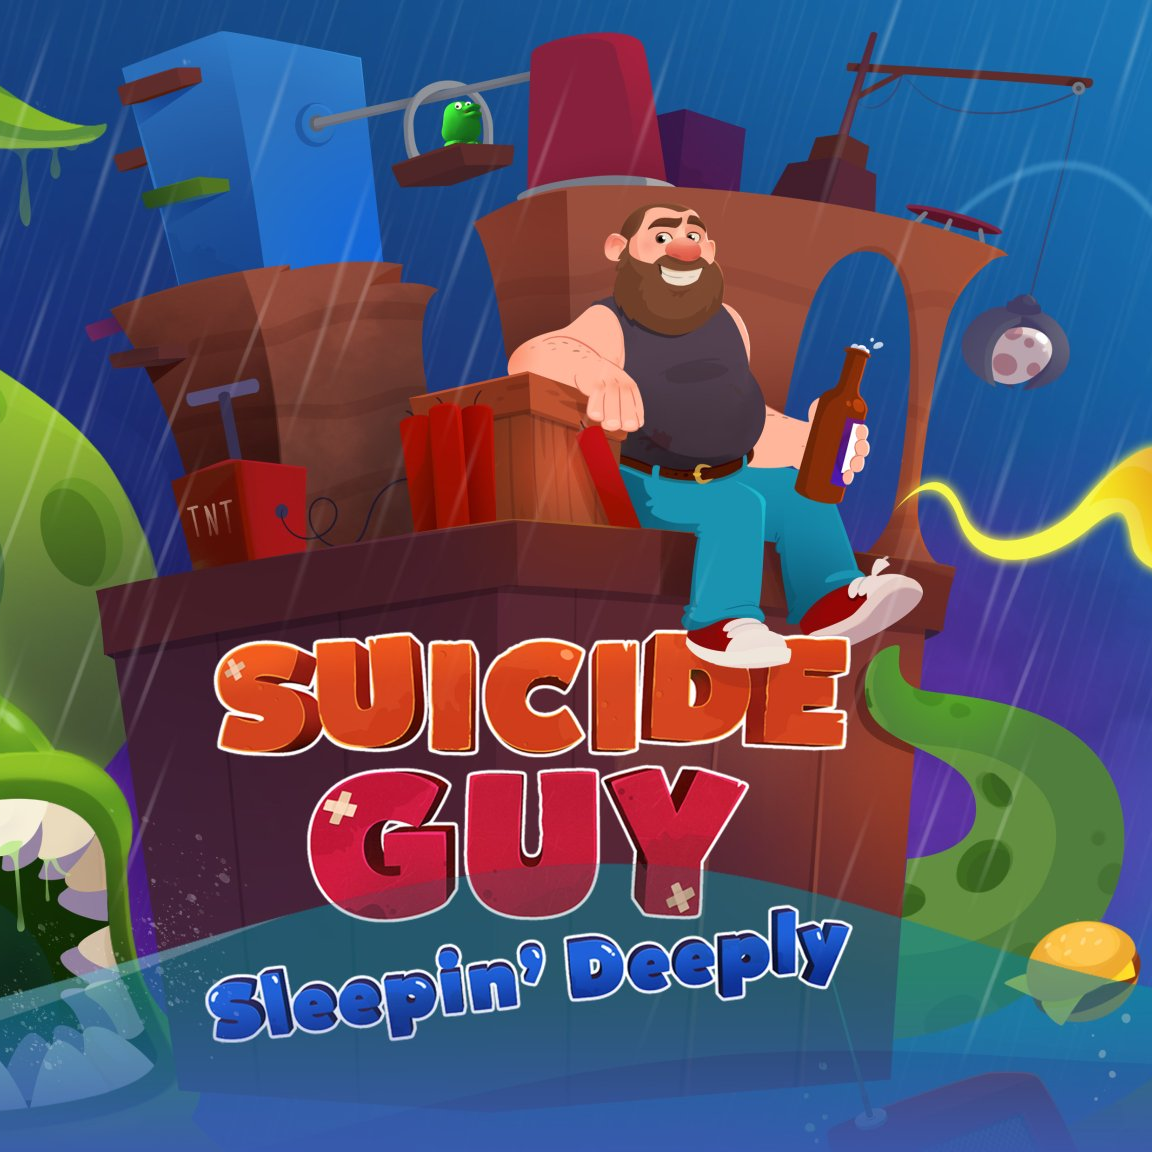 jaquette du jeu vidéo Suicide Guy: Sleepin’ Deeply